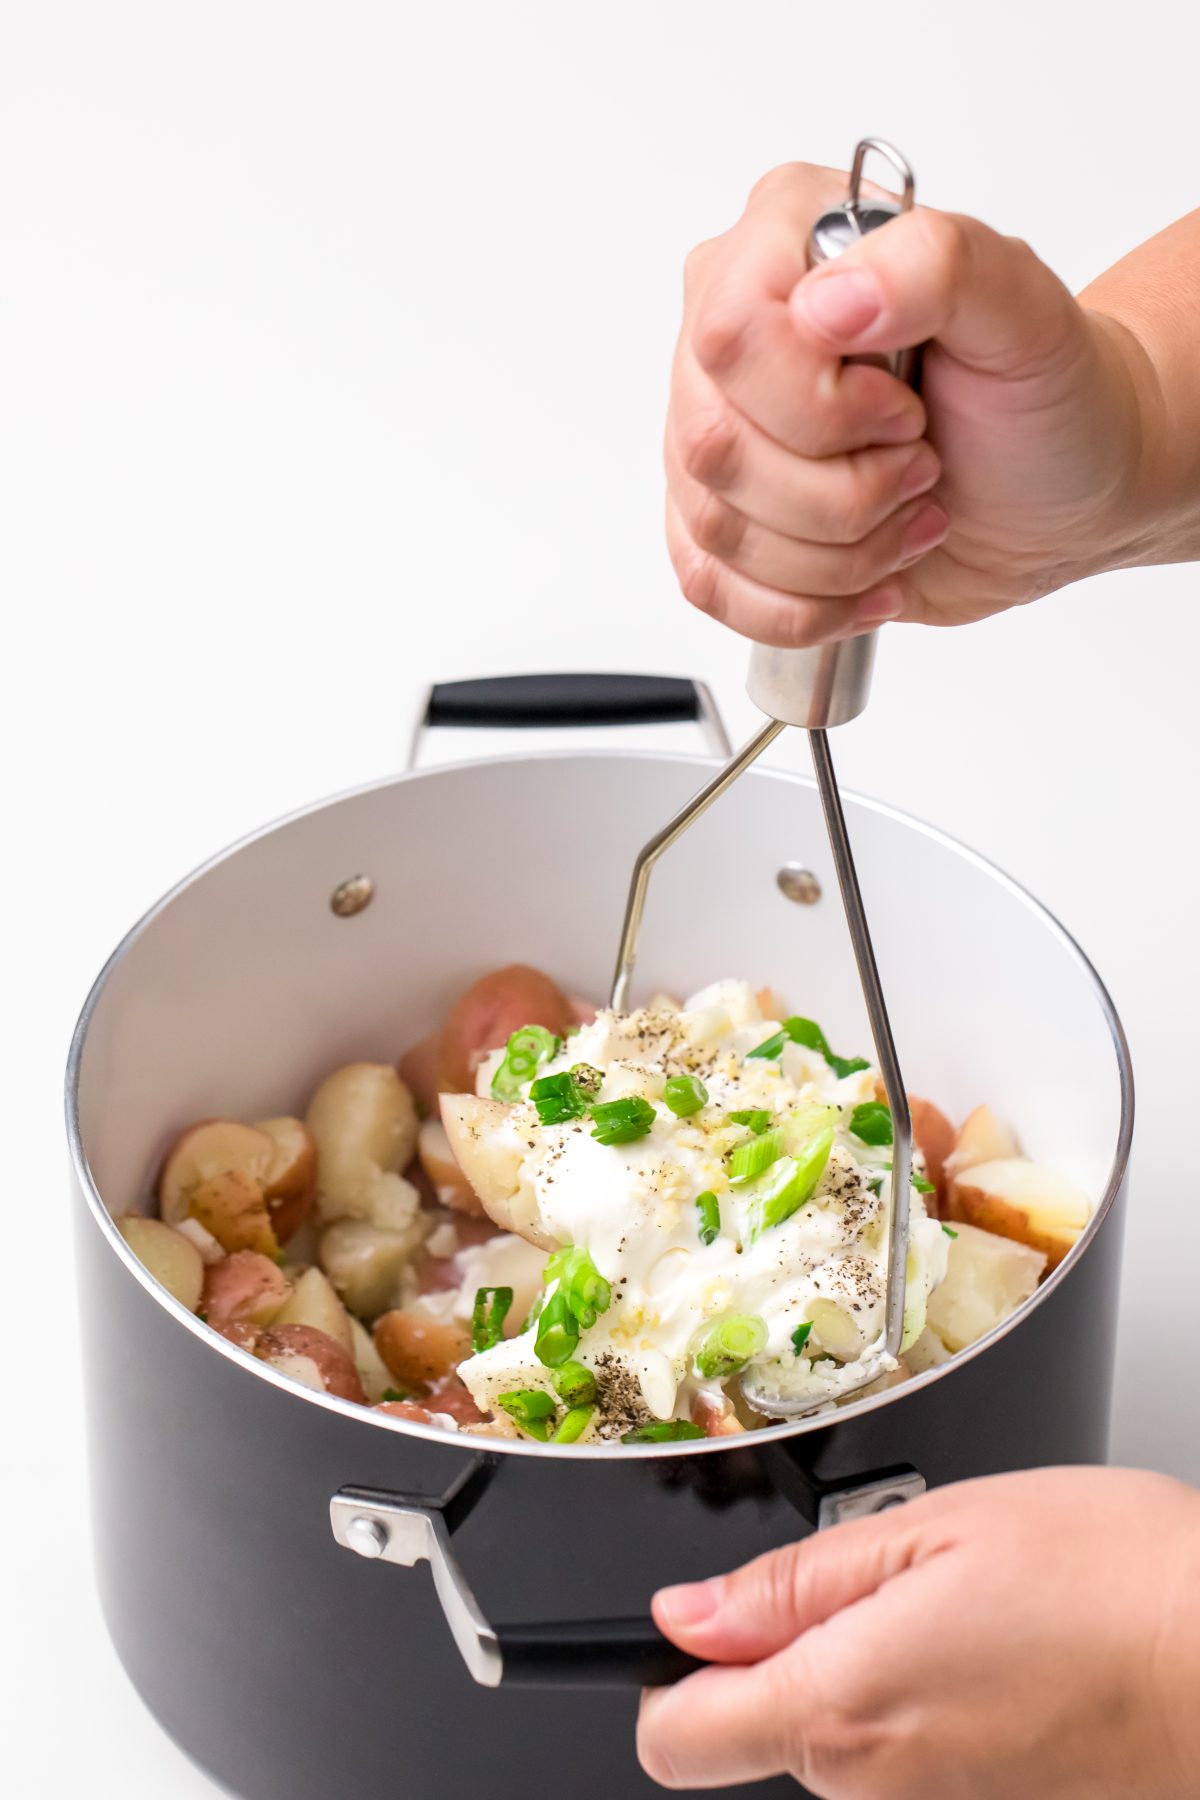 mash potatoes with seasonings